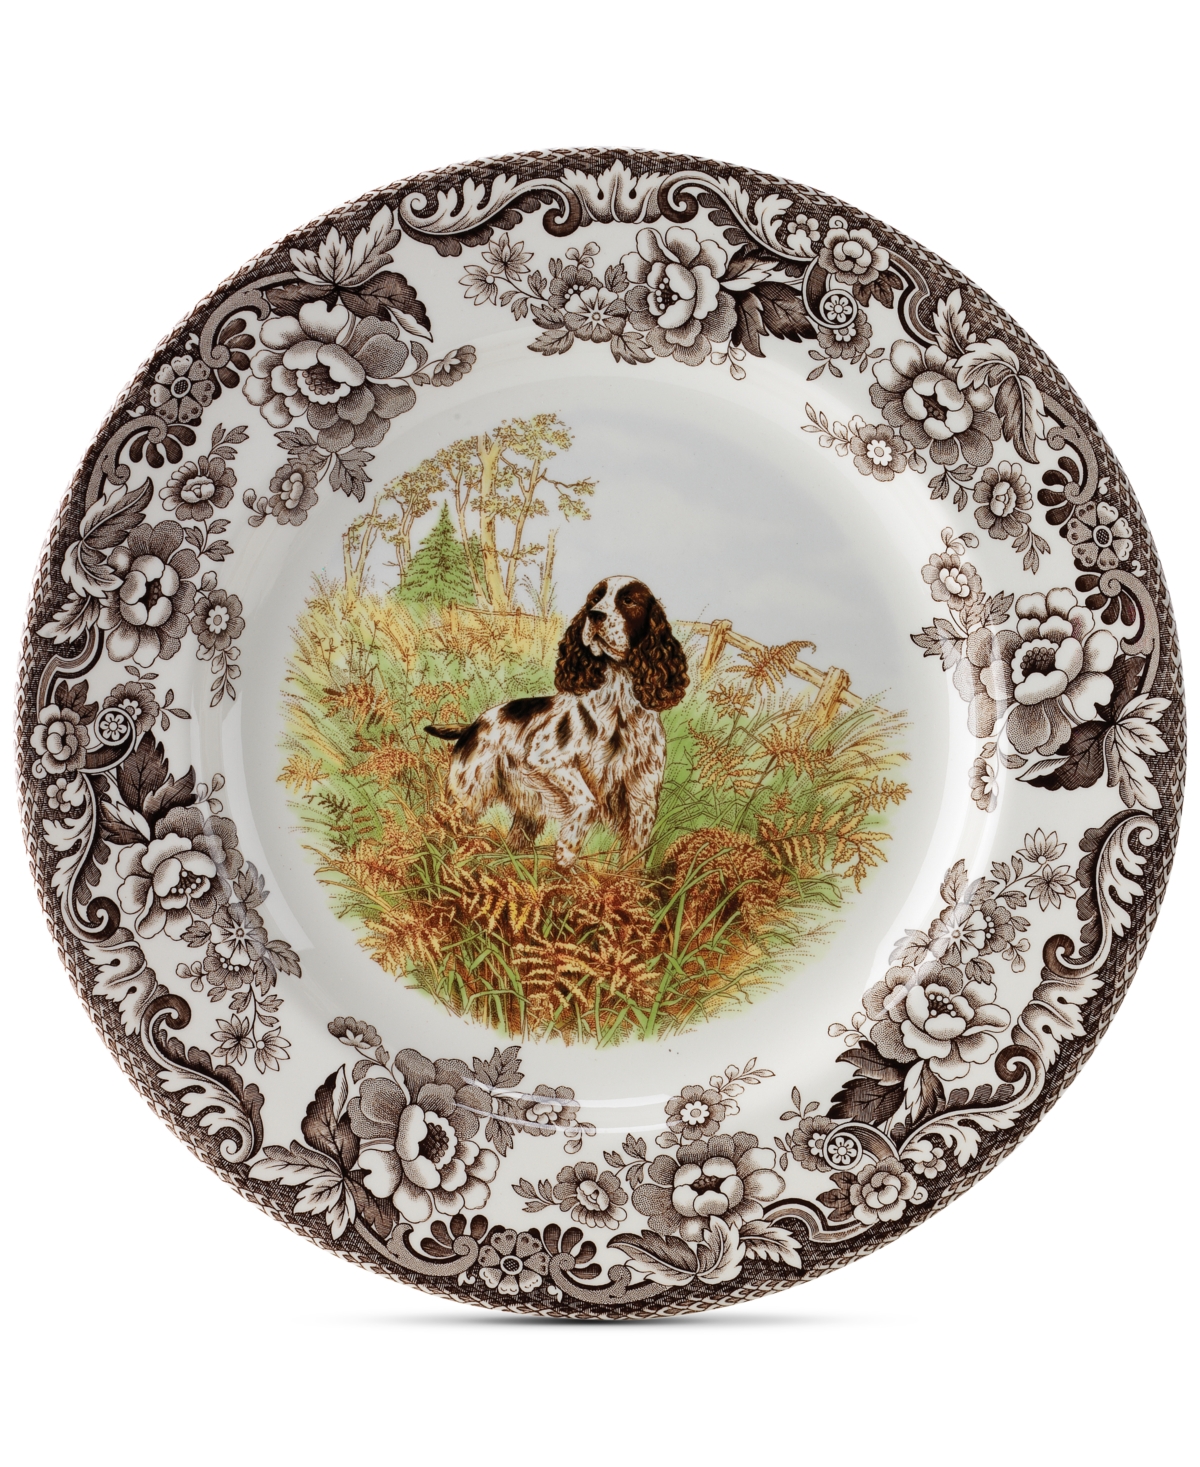 Woodland English Spaniel Dinner Plate - Brown